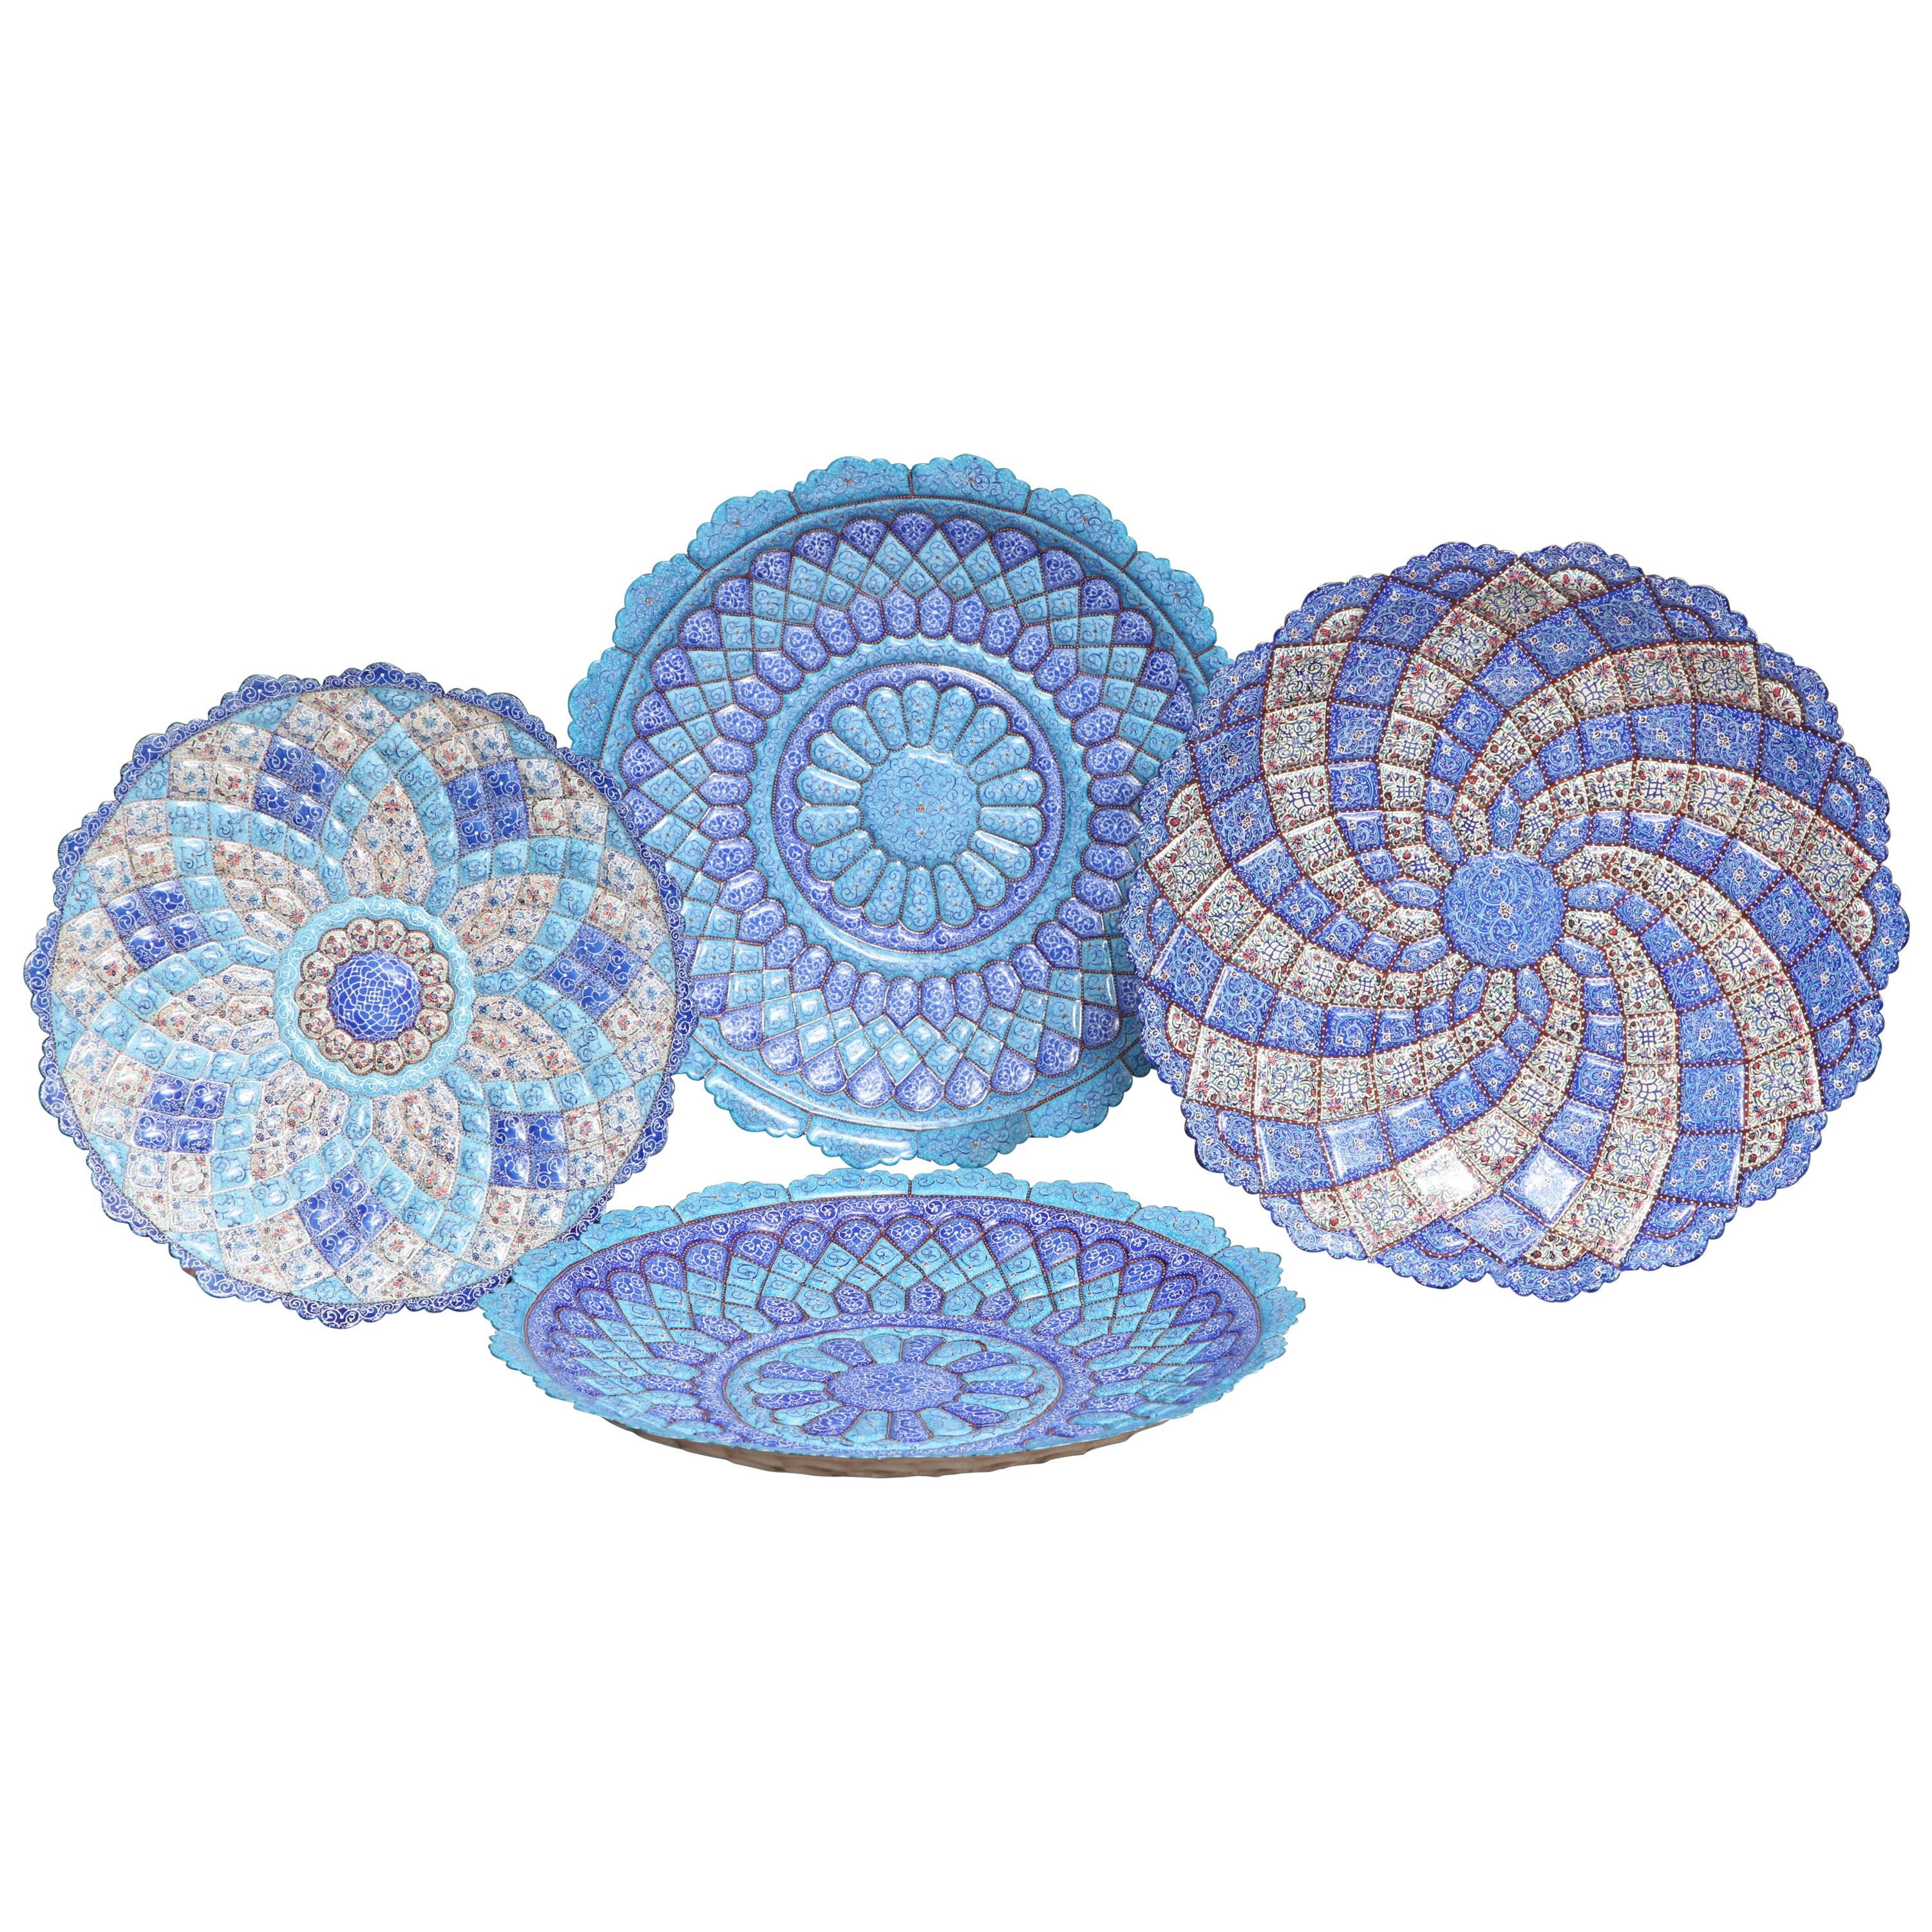 Blue Iranian Minakari Plates, Vitreous Enamel on Copper